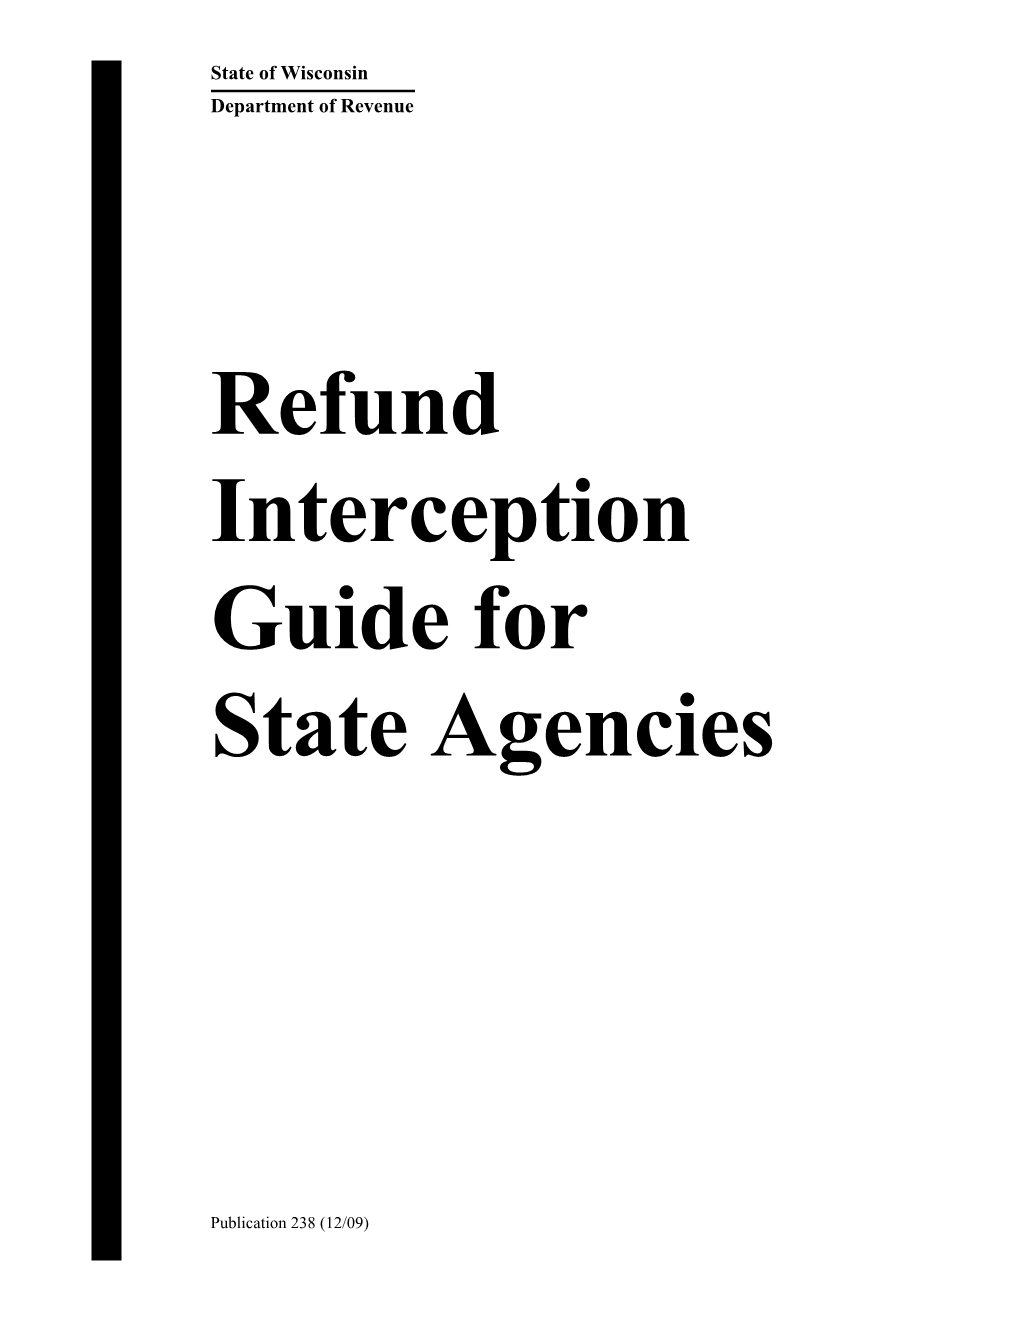 Pub 238 Refund Interception Guide for State Agencies